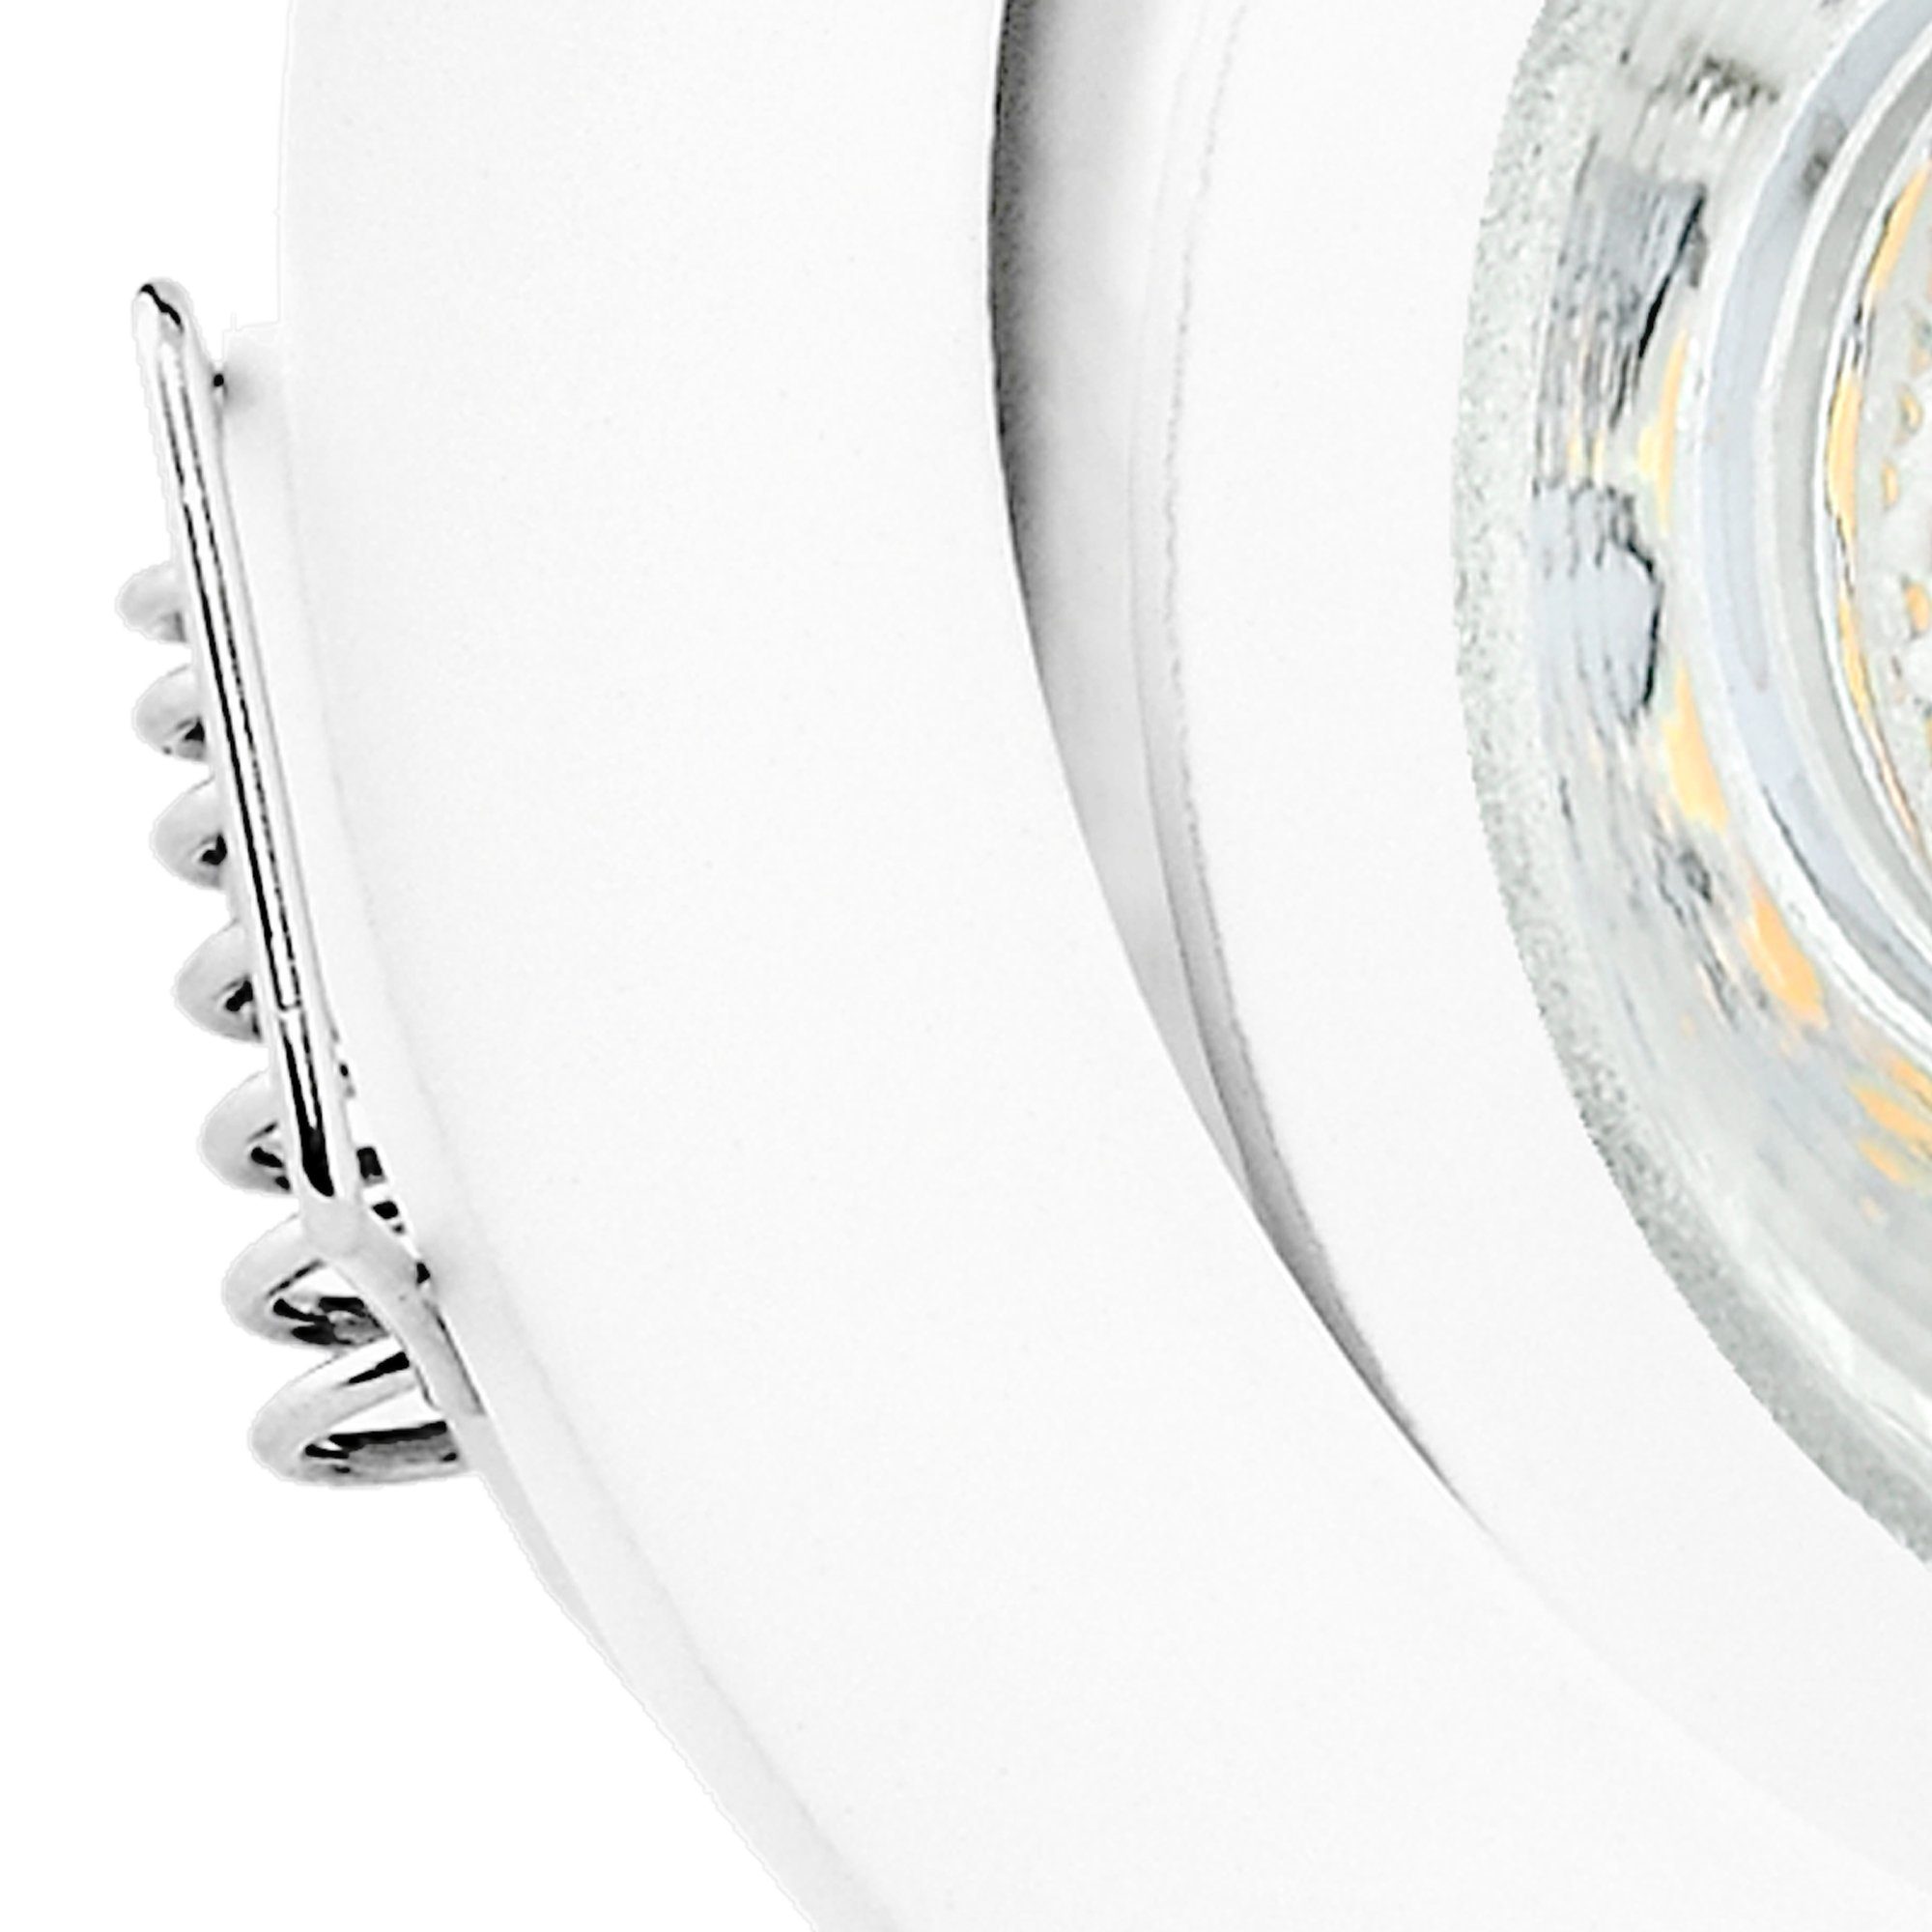 Weiss GU10 3W LED 230V inklusive, Einbaustrahler neutralweiss Leuchtmittel inklusive - Leuchtmittel Einbaustrahler schwenkbar, LED rund linovum